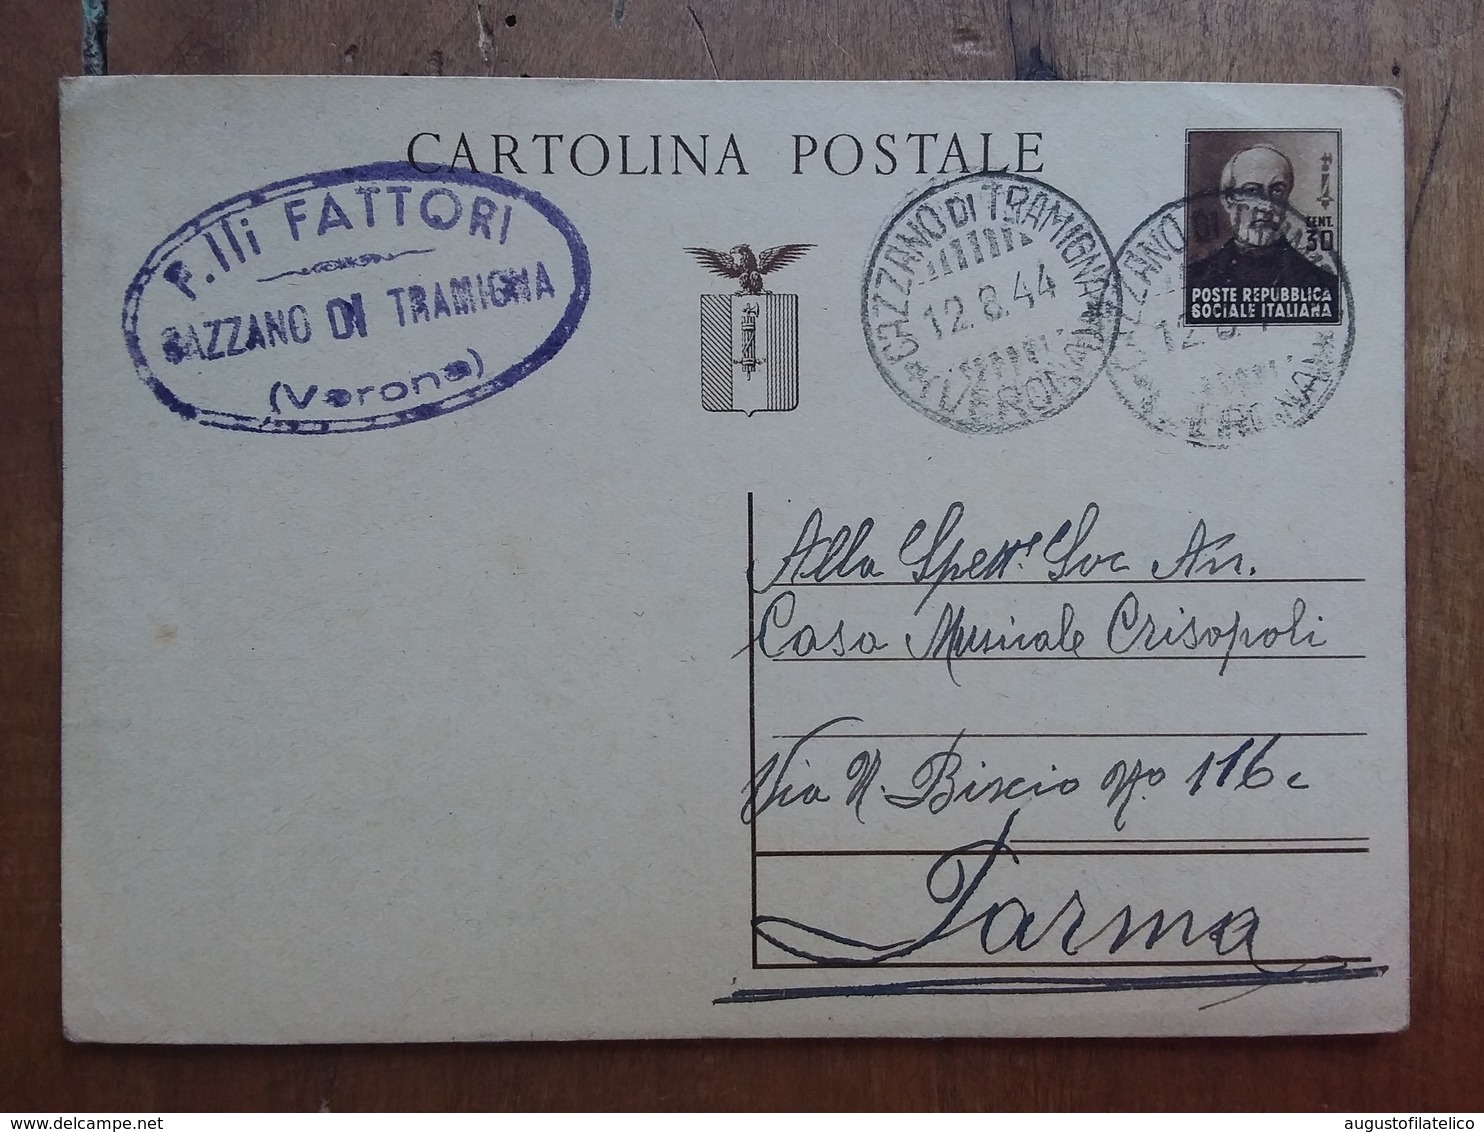 R.S.I. - Cartolina Postale Mazzini Senza Francobolli Aggiunti - Viaggiata + Spese Postali - Storia Postale